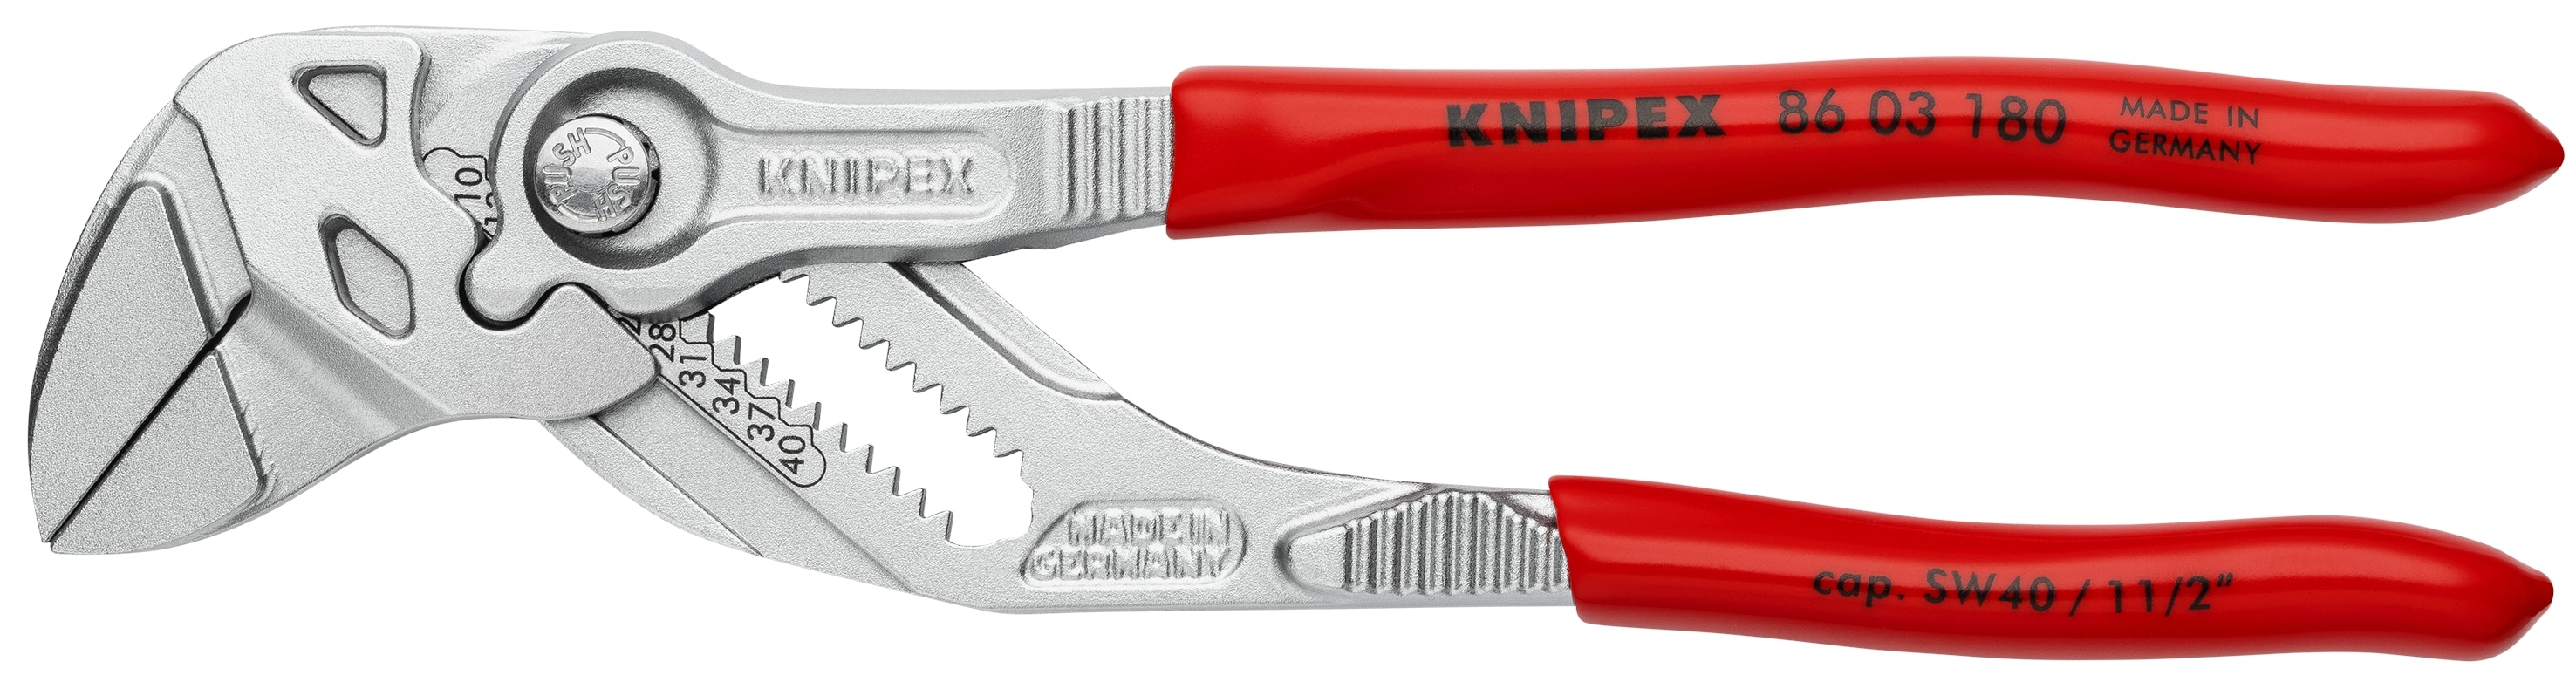 Knipex Mechanic Pliers Set Curved Bent Angled Hose Grip 3pc 8 9K008012 US  - Bowers Tool Co.